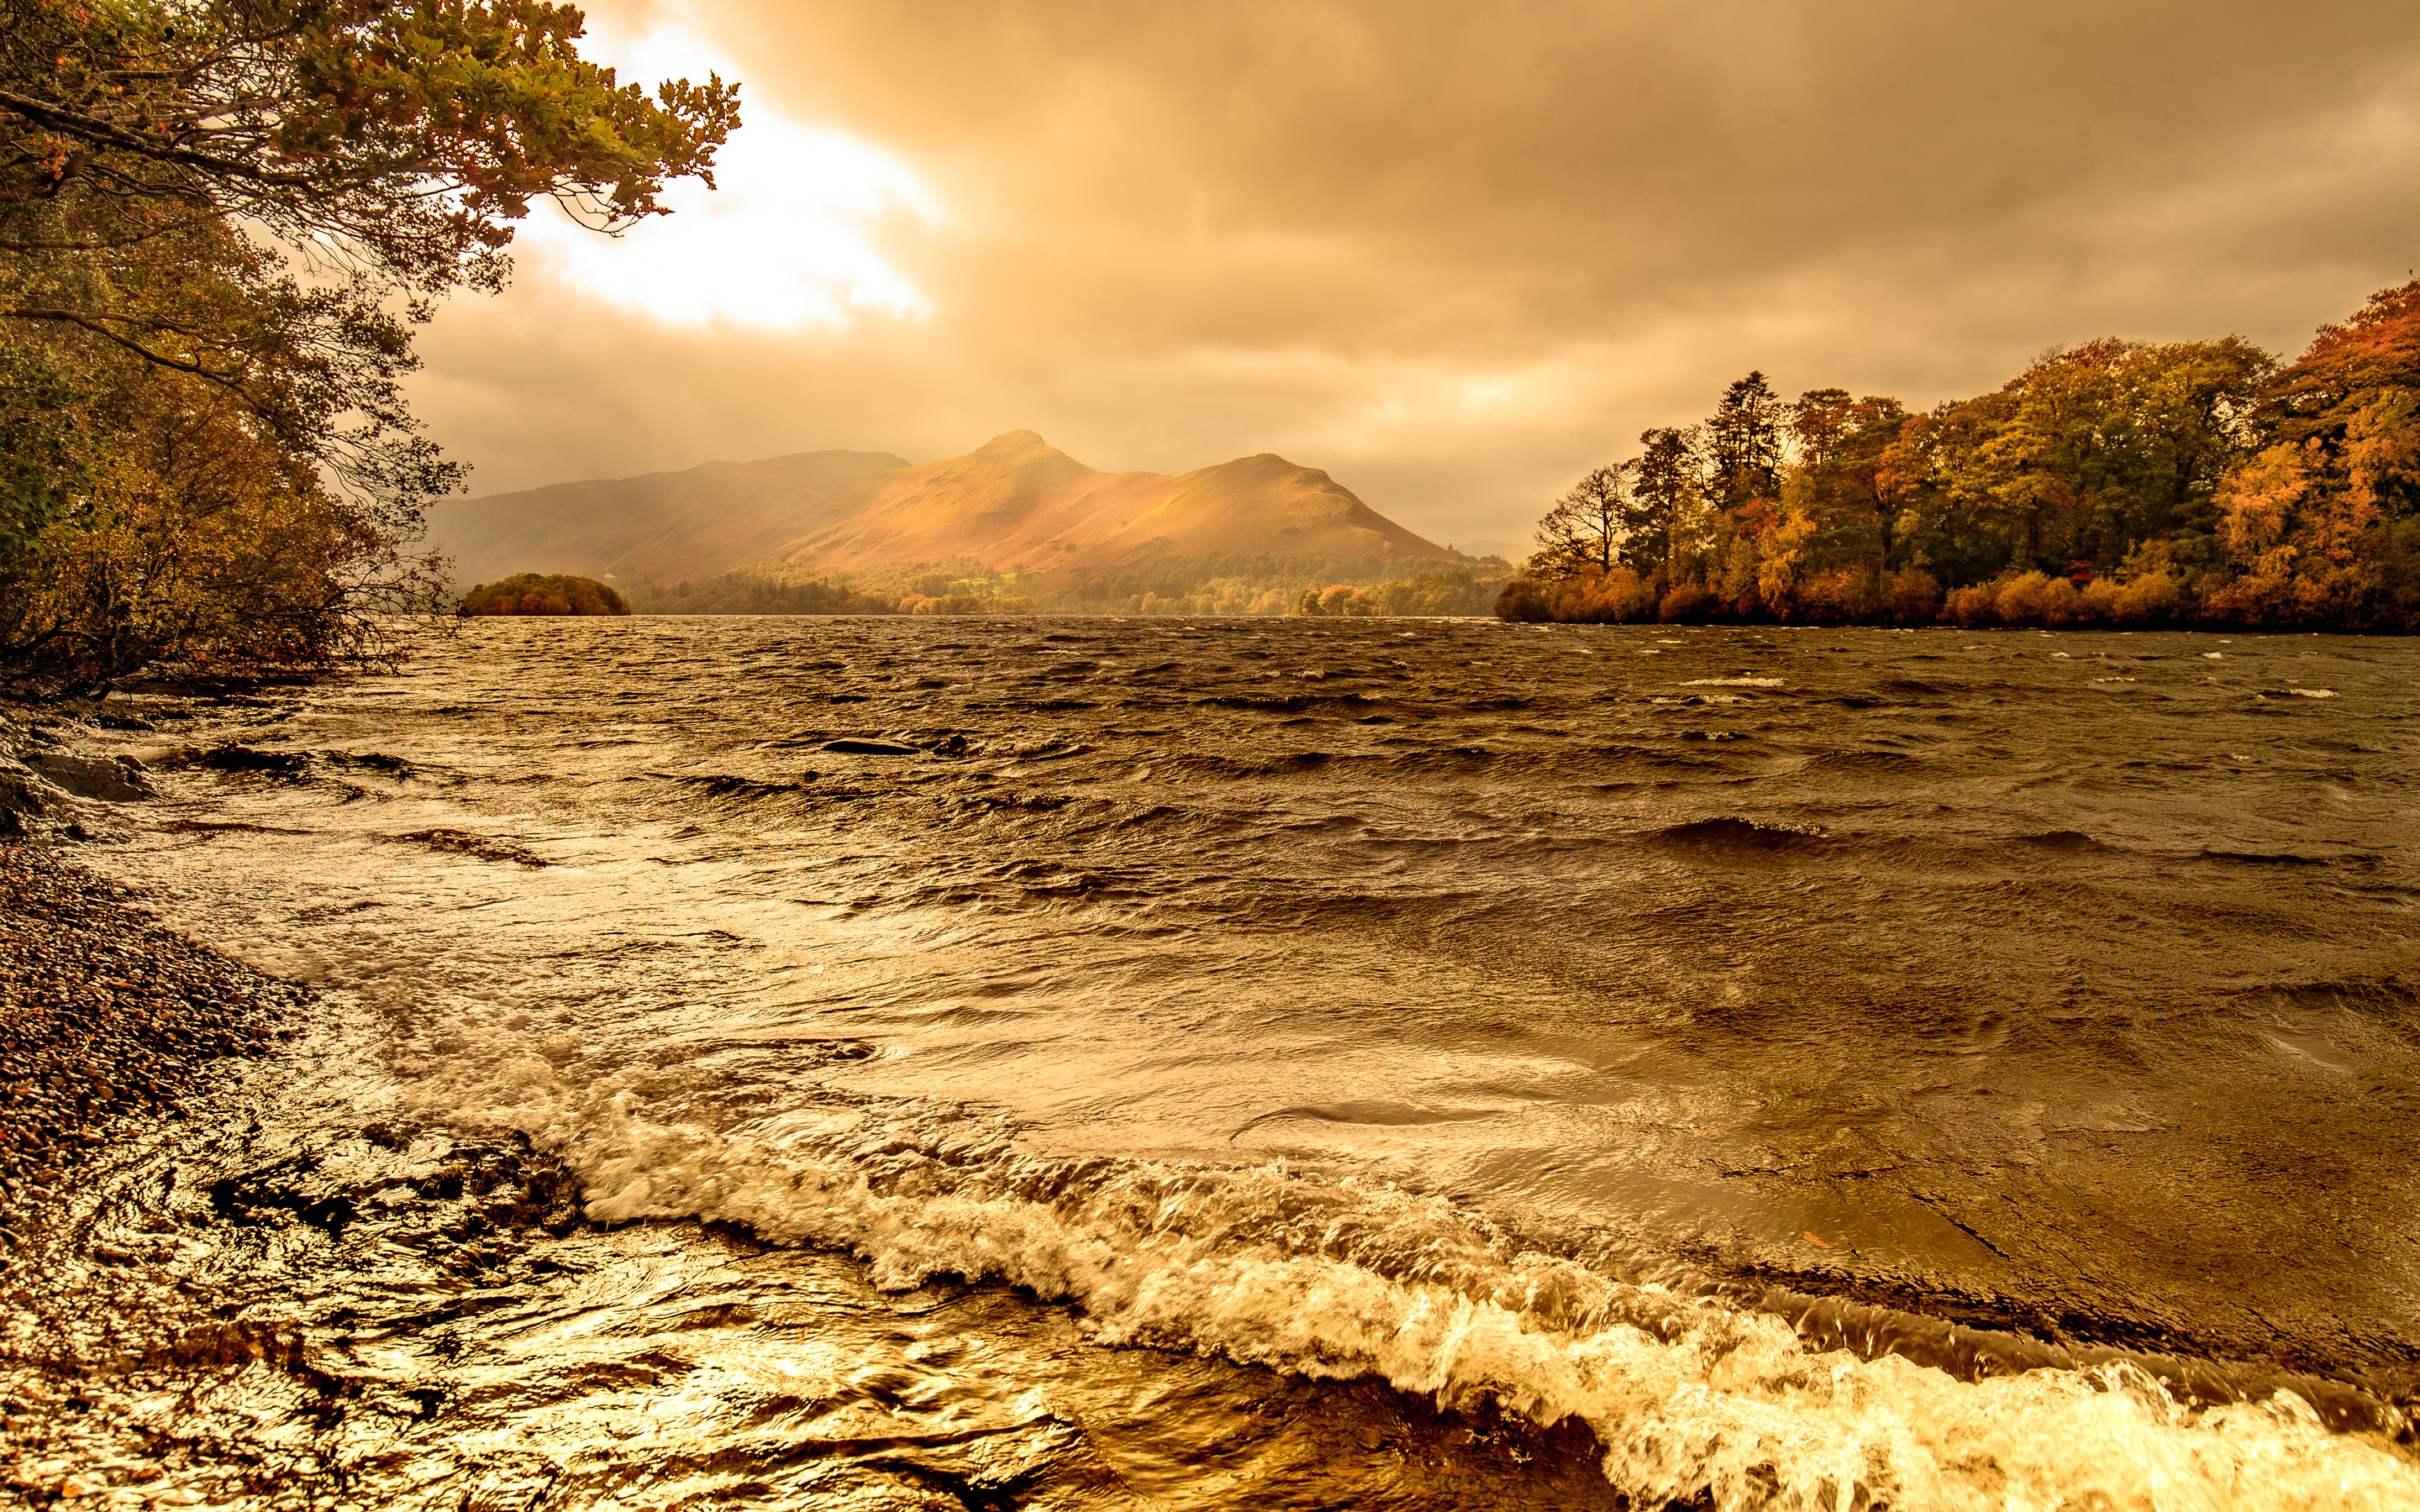 Lake Windermere Autumn Season 4k Macbook Pro Retina HD 4k Wallpaper, Image, Background, Photo and Picture